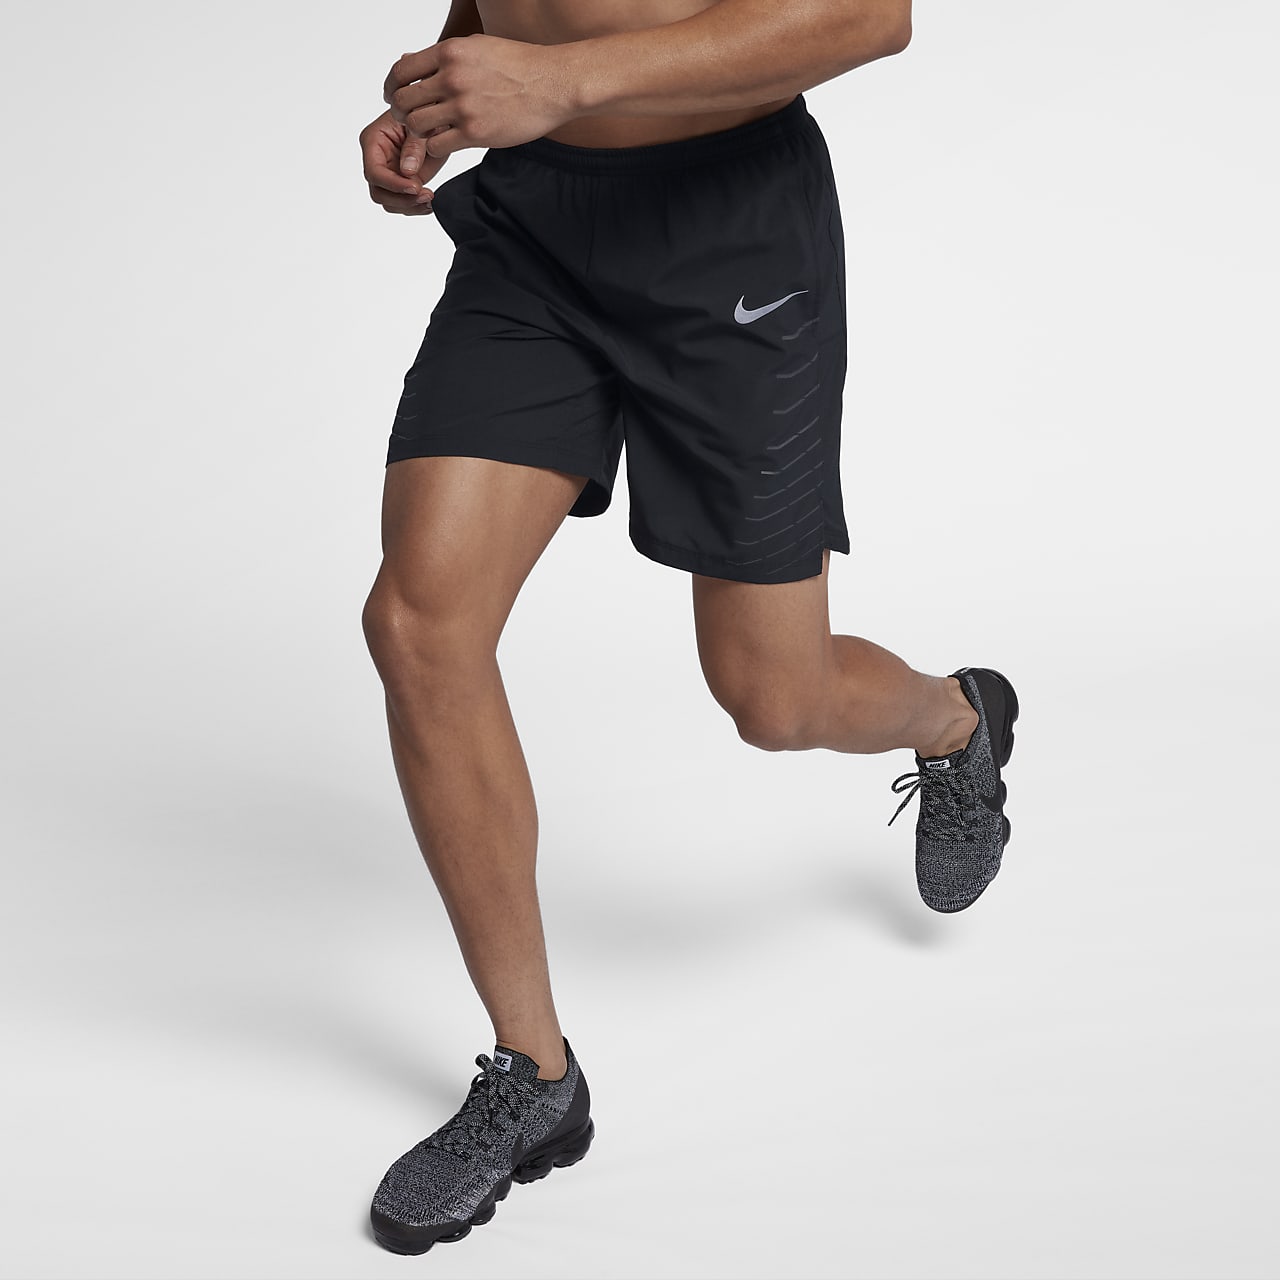 18cm approx.) Running Shorts. Nike ID